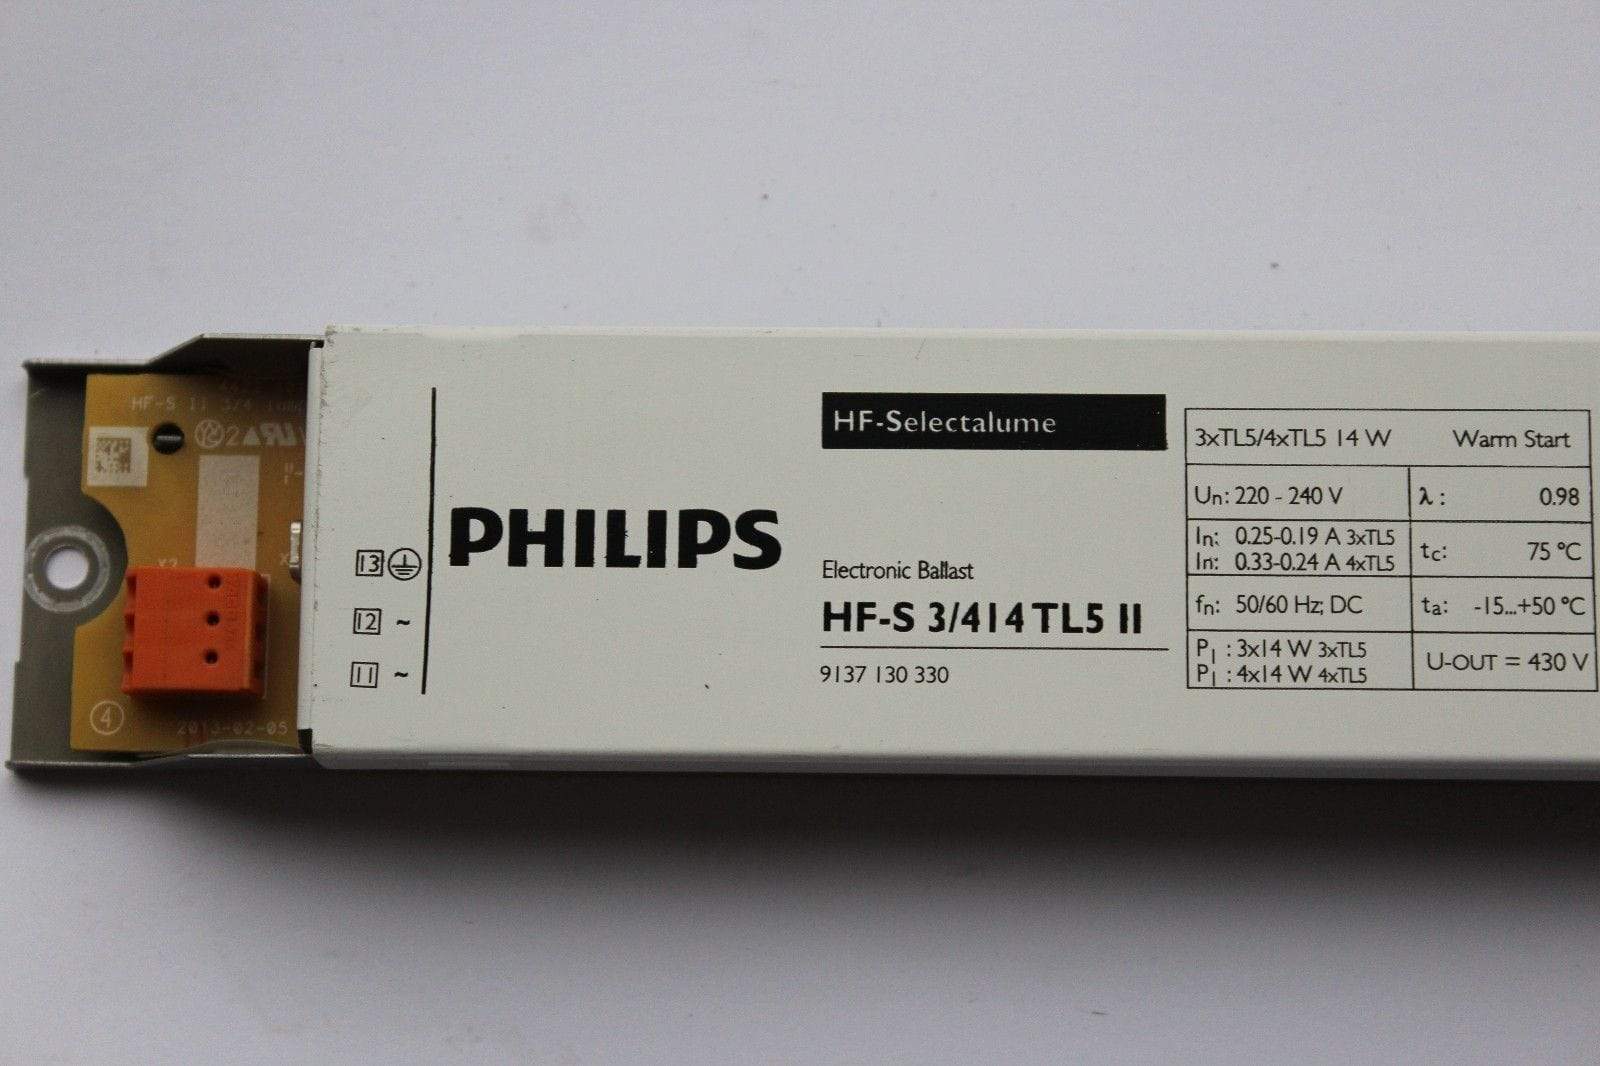 PHILIPS HF-Selectalume TL5 Flourescent Ballast x12PCs - DELIGHT OptoElectronics Pte. Ltd